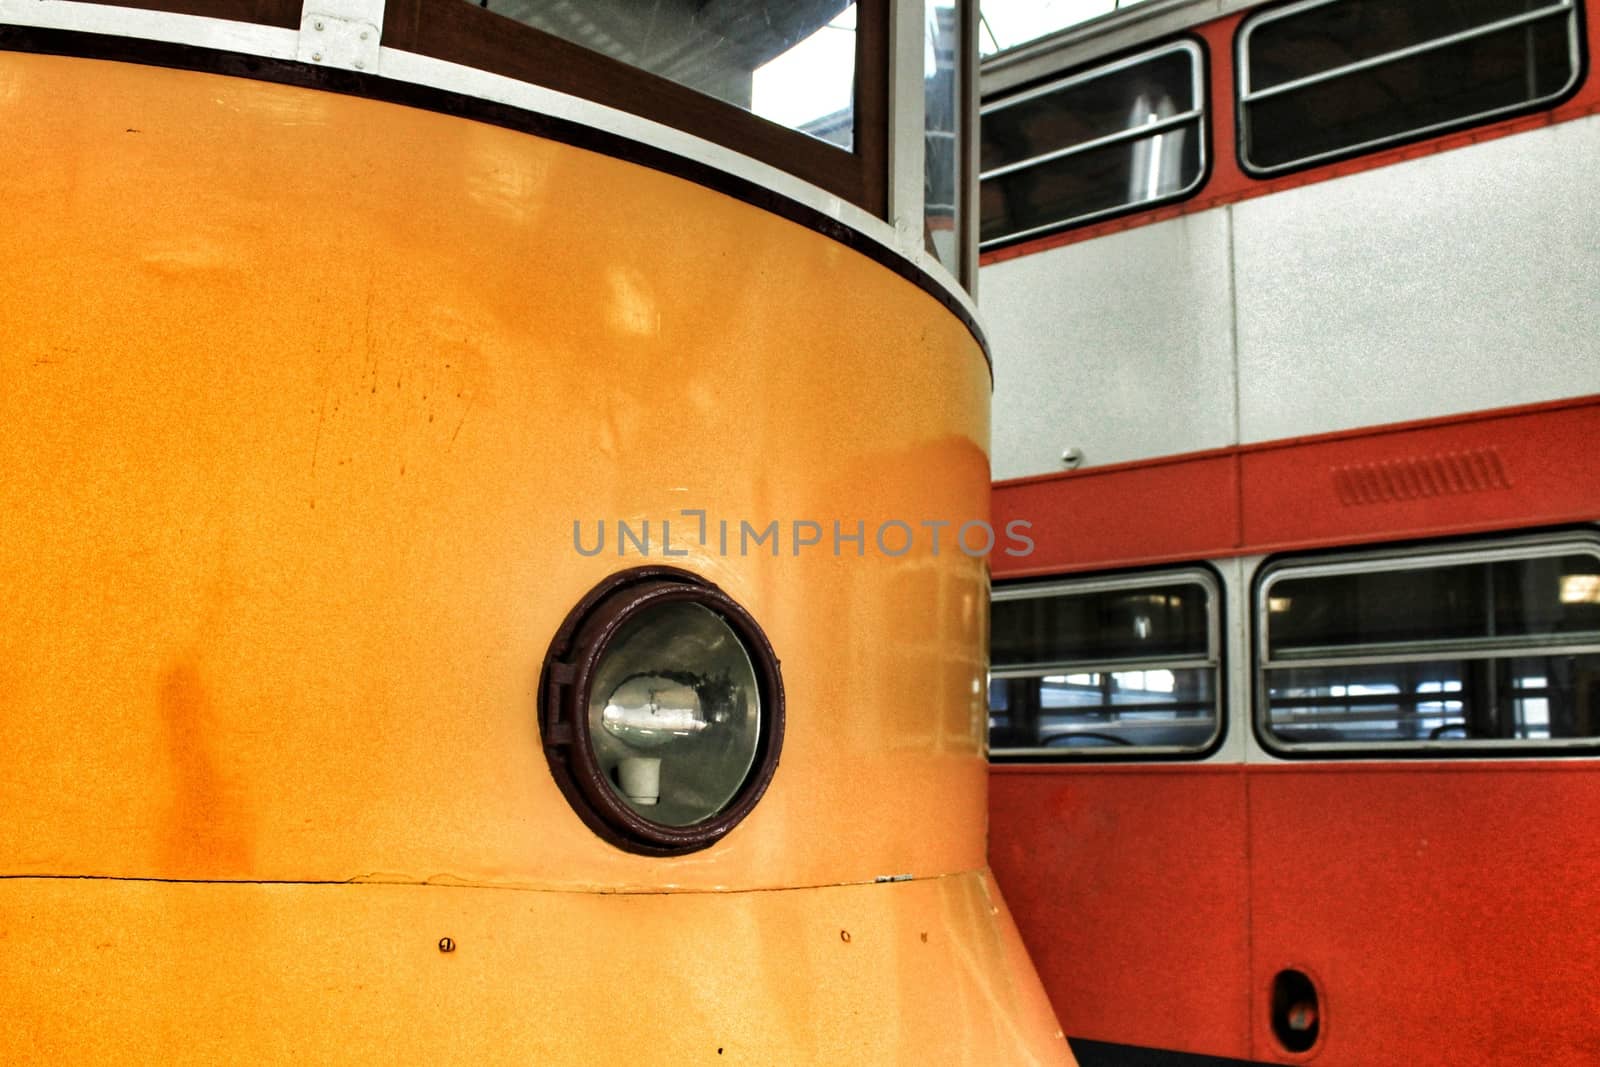 Old vintage trams in Lisbon by soniabonet